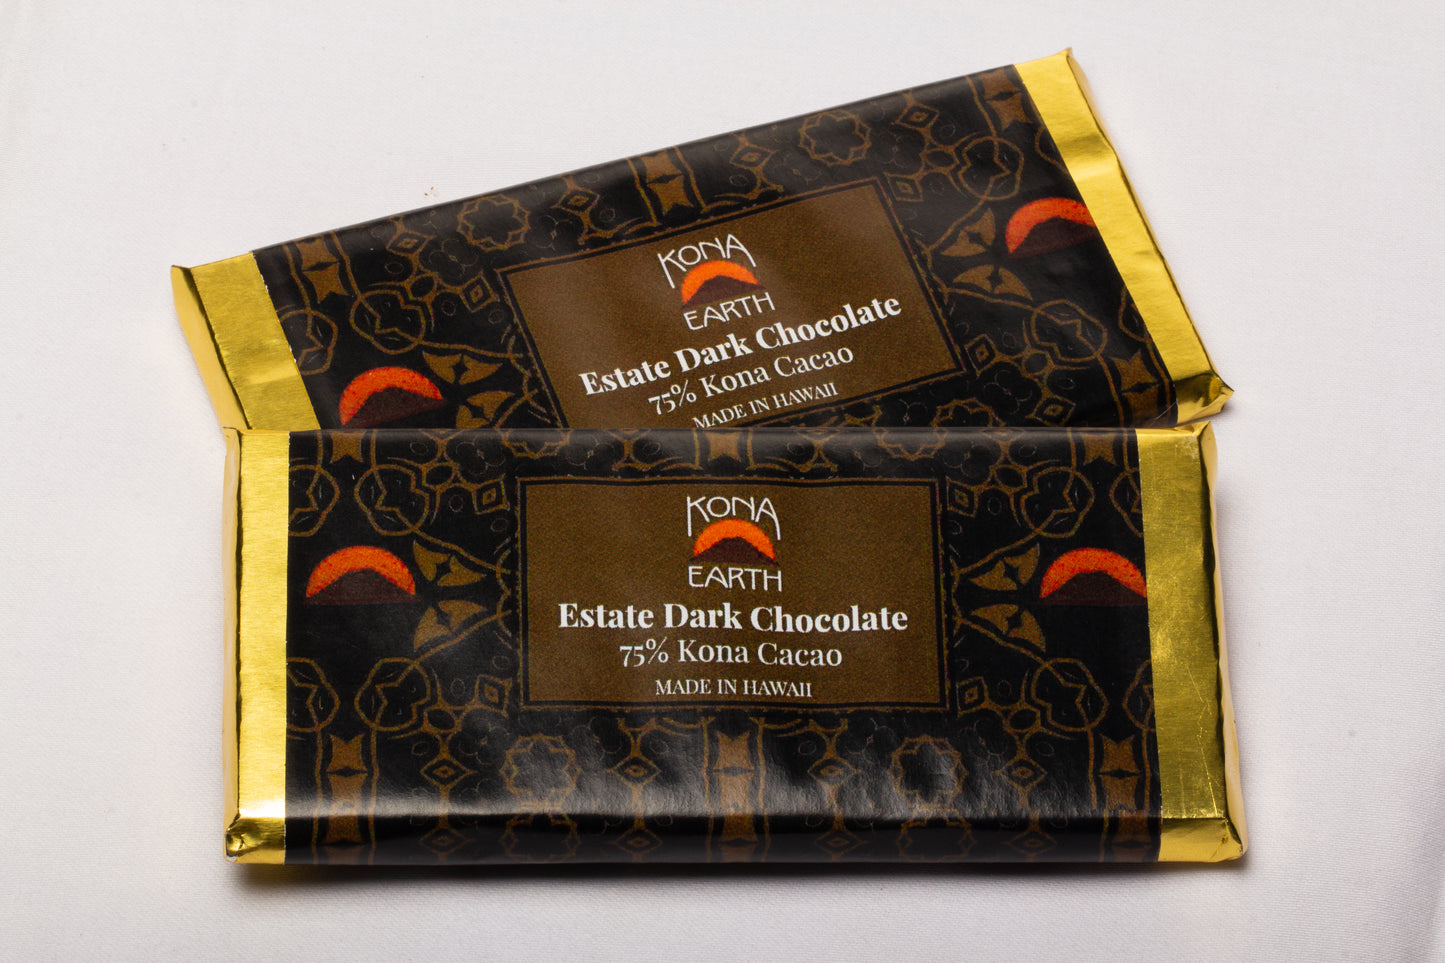 2 Kona Earth dark chocolate bars